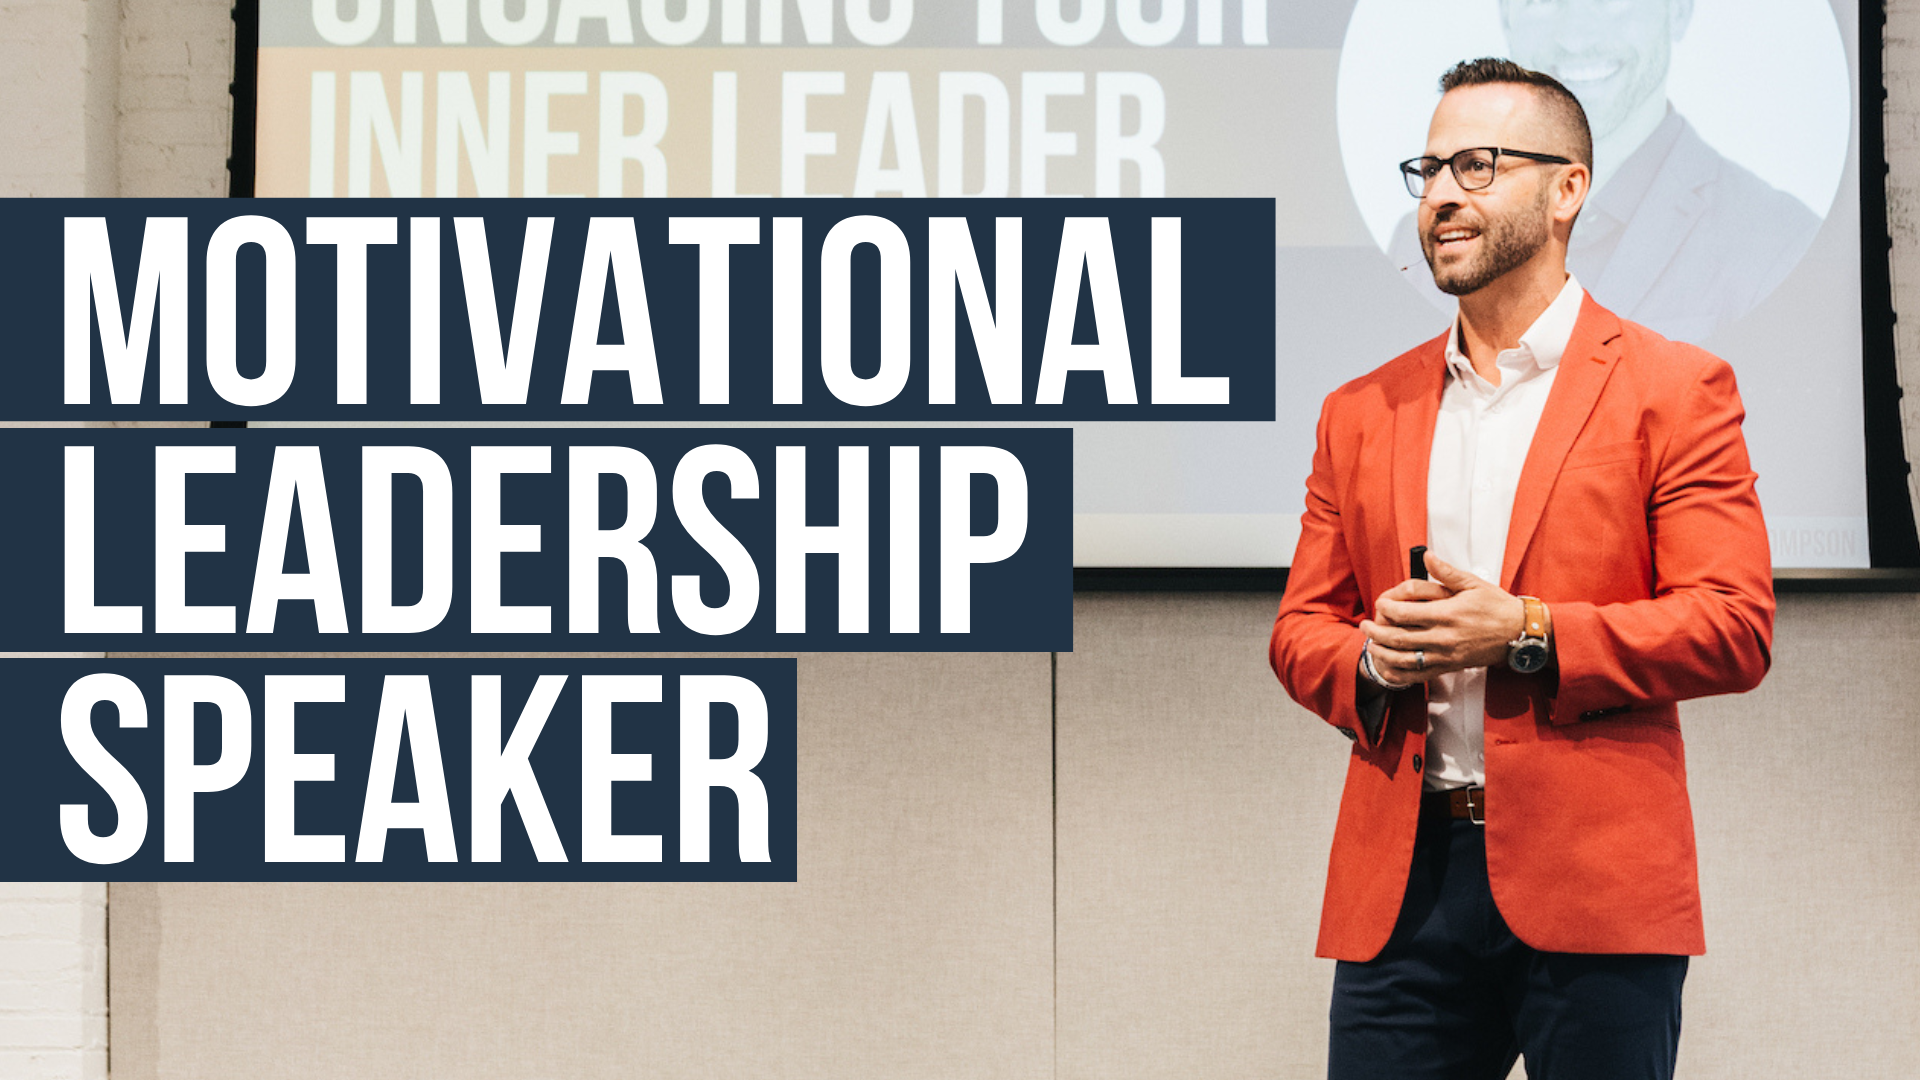 Jake Thompson, Leadership Motivational Speaker